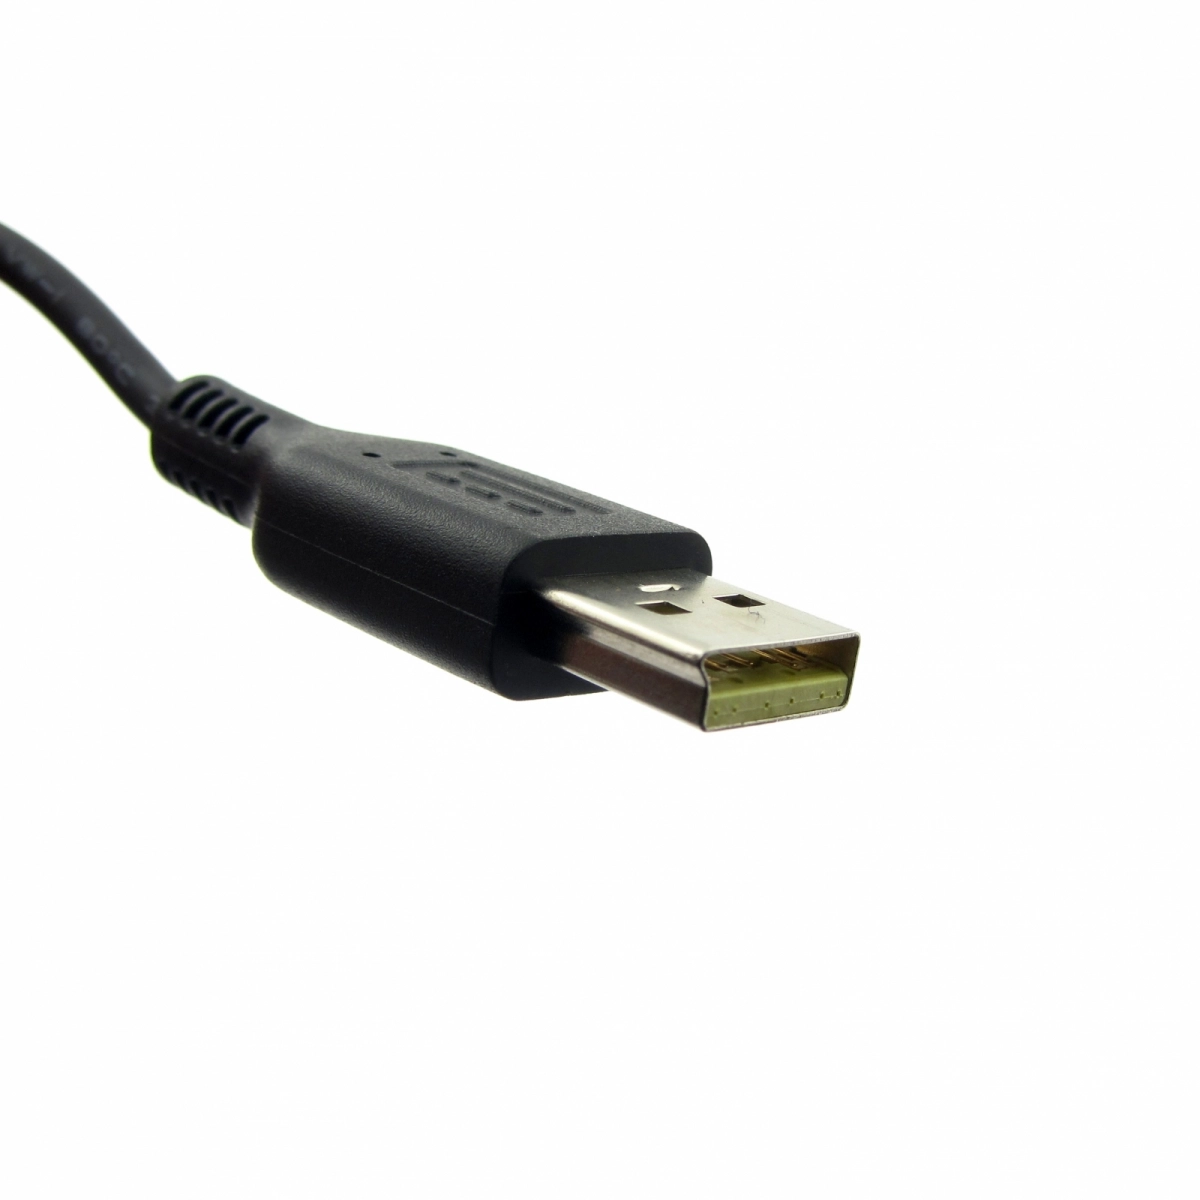 MTXtec Netzteil für LENOVO 36200573, 20/5.2V, 2A, Stecker USB